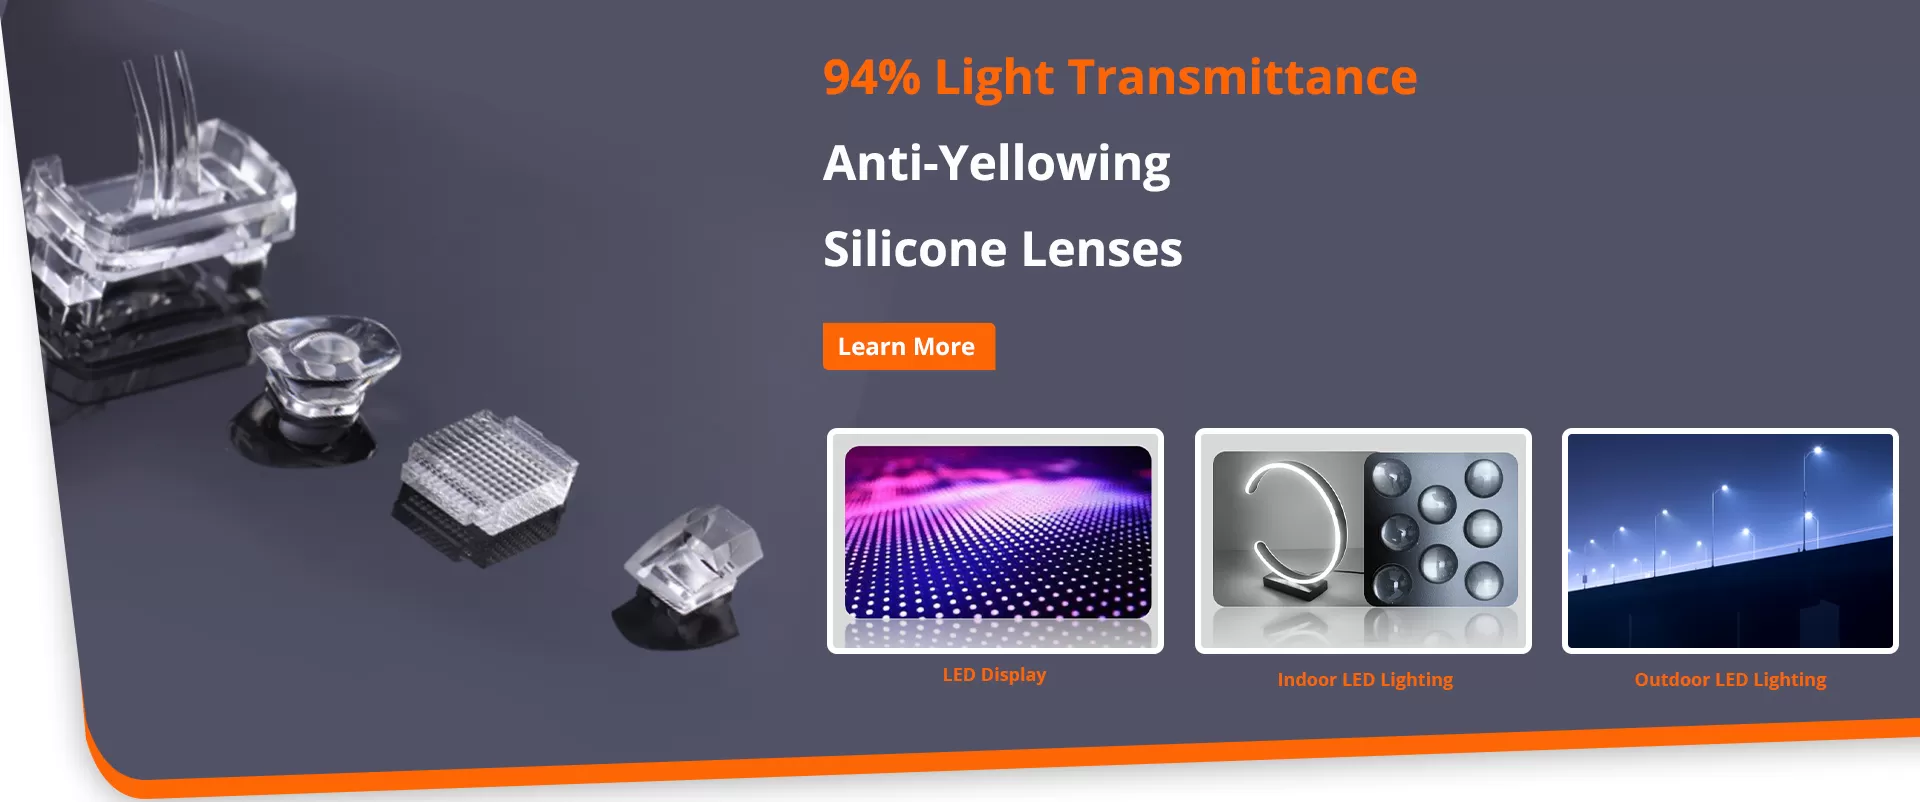 Silicone Lenses